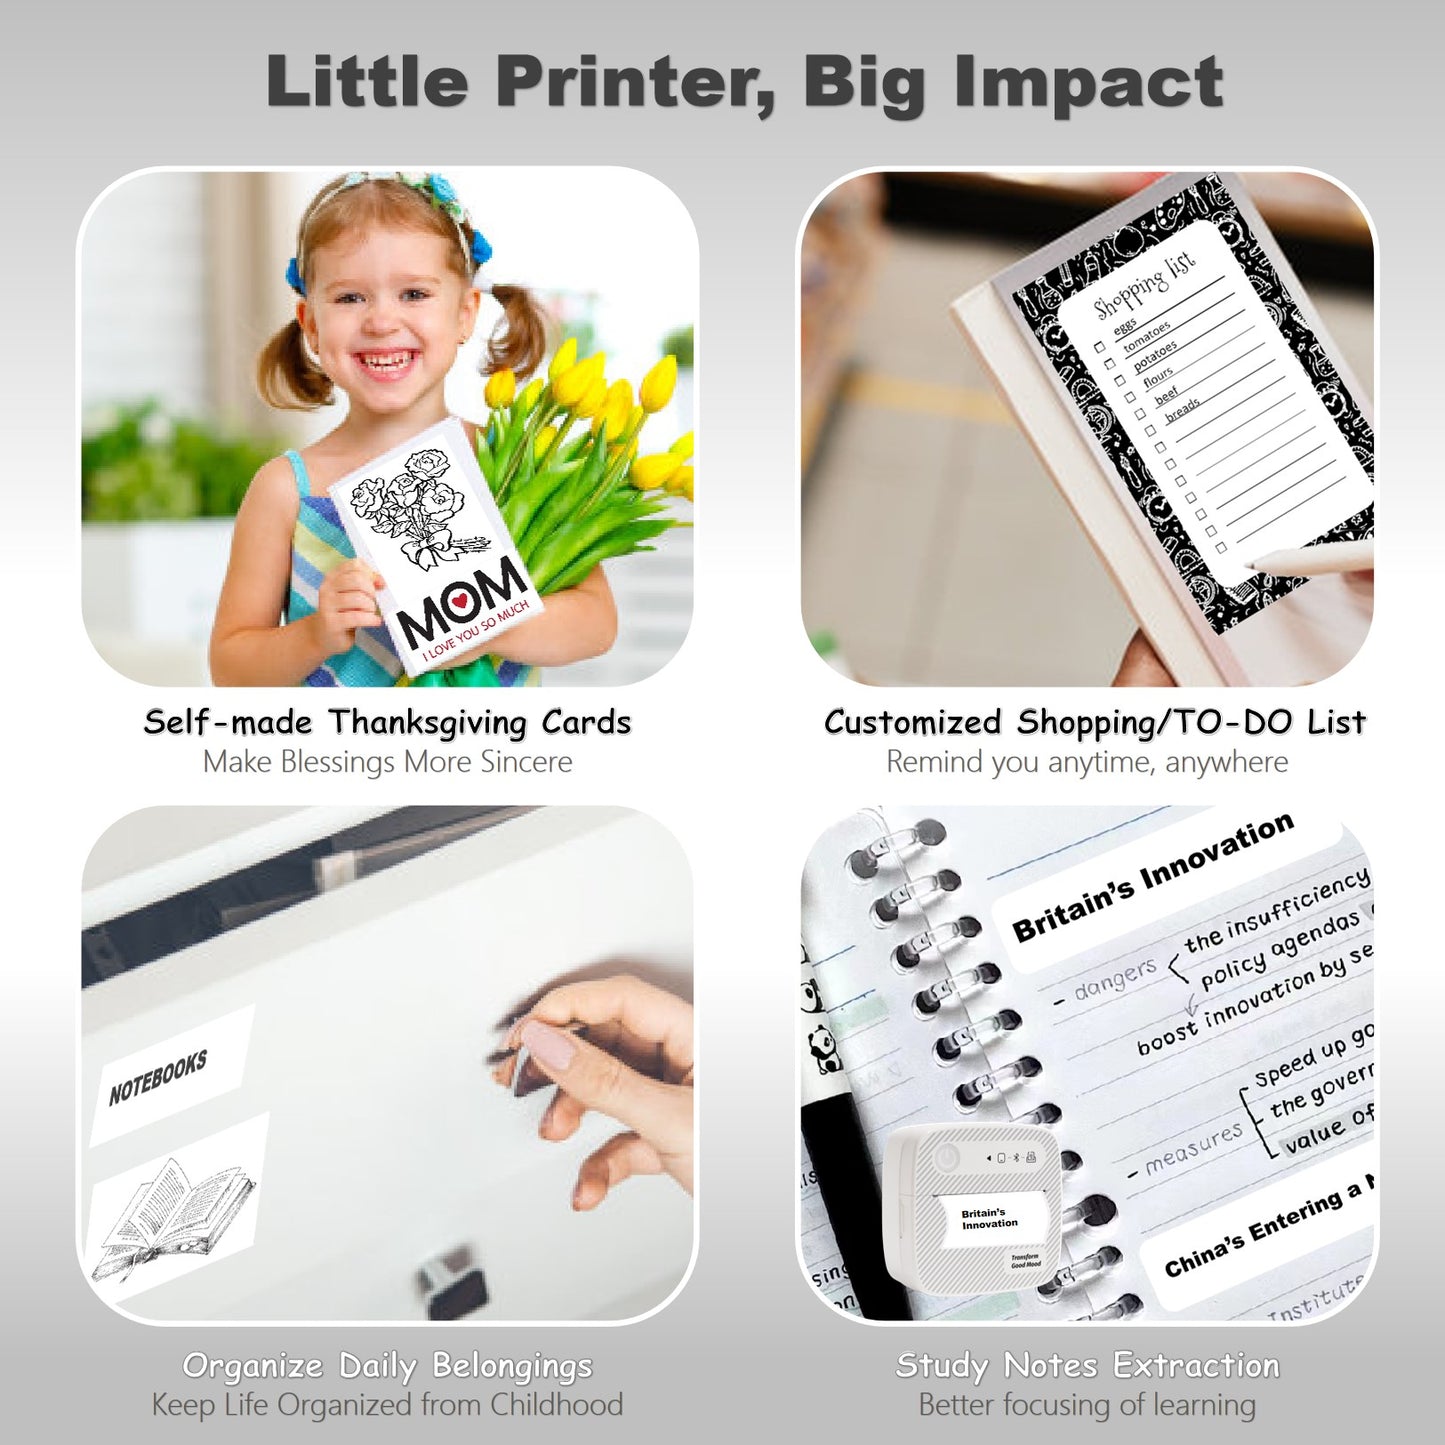 DOLEWA Mini Inkless Sticker Printer Bluetooth Thermal Pocket Printer-Stripe